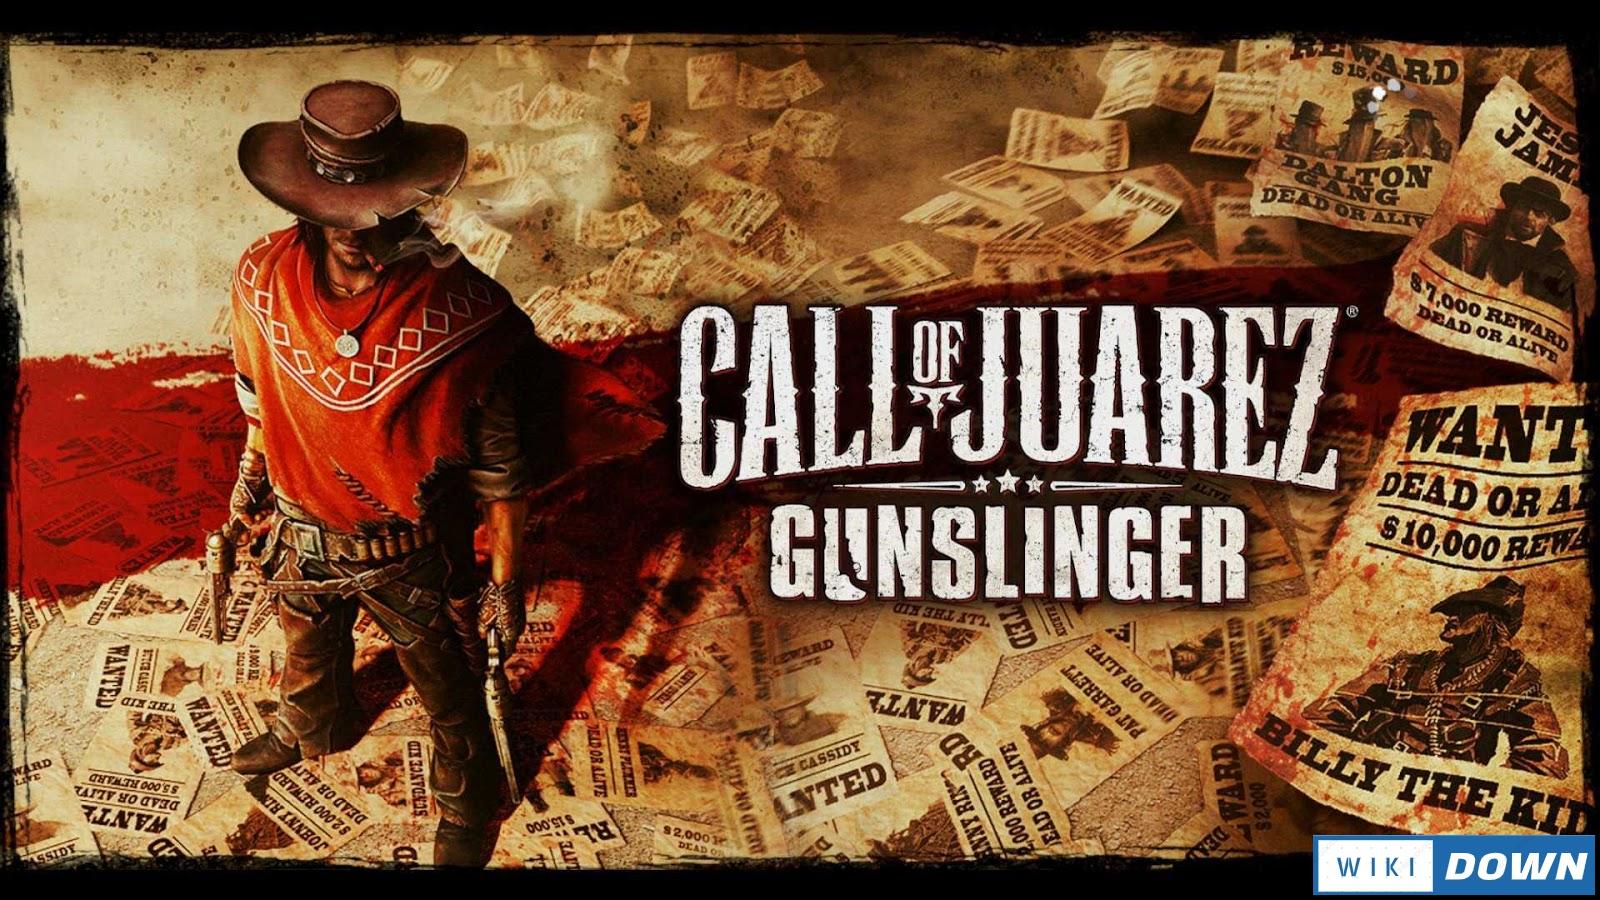 Download Call of Juarez Gunslinger Mới Nhất